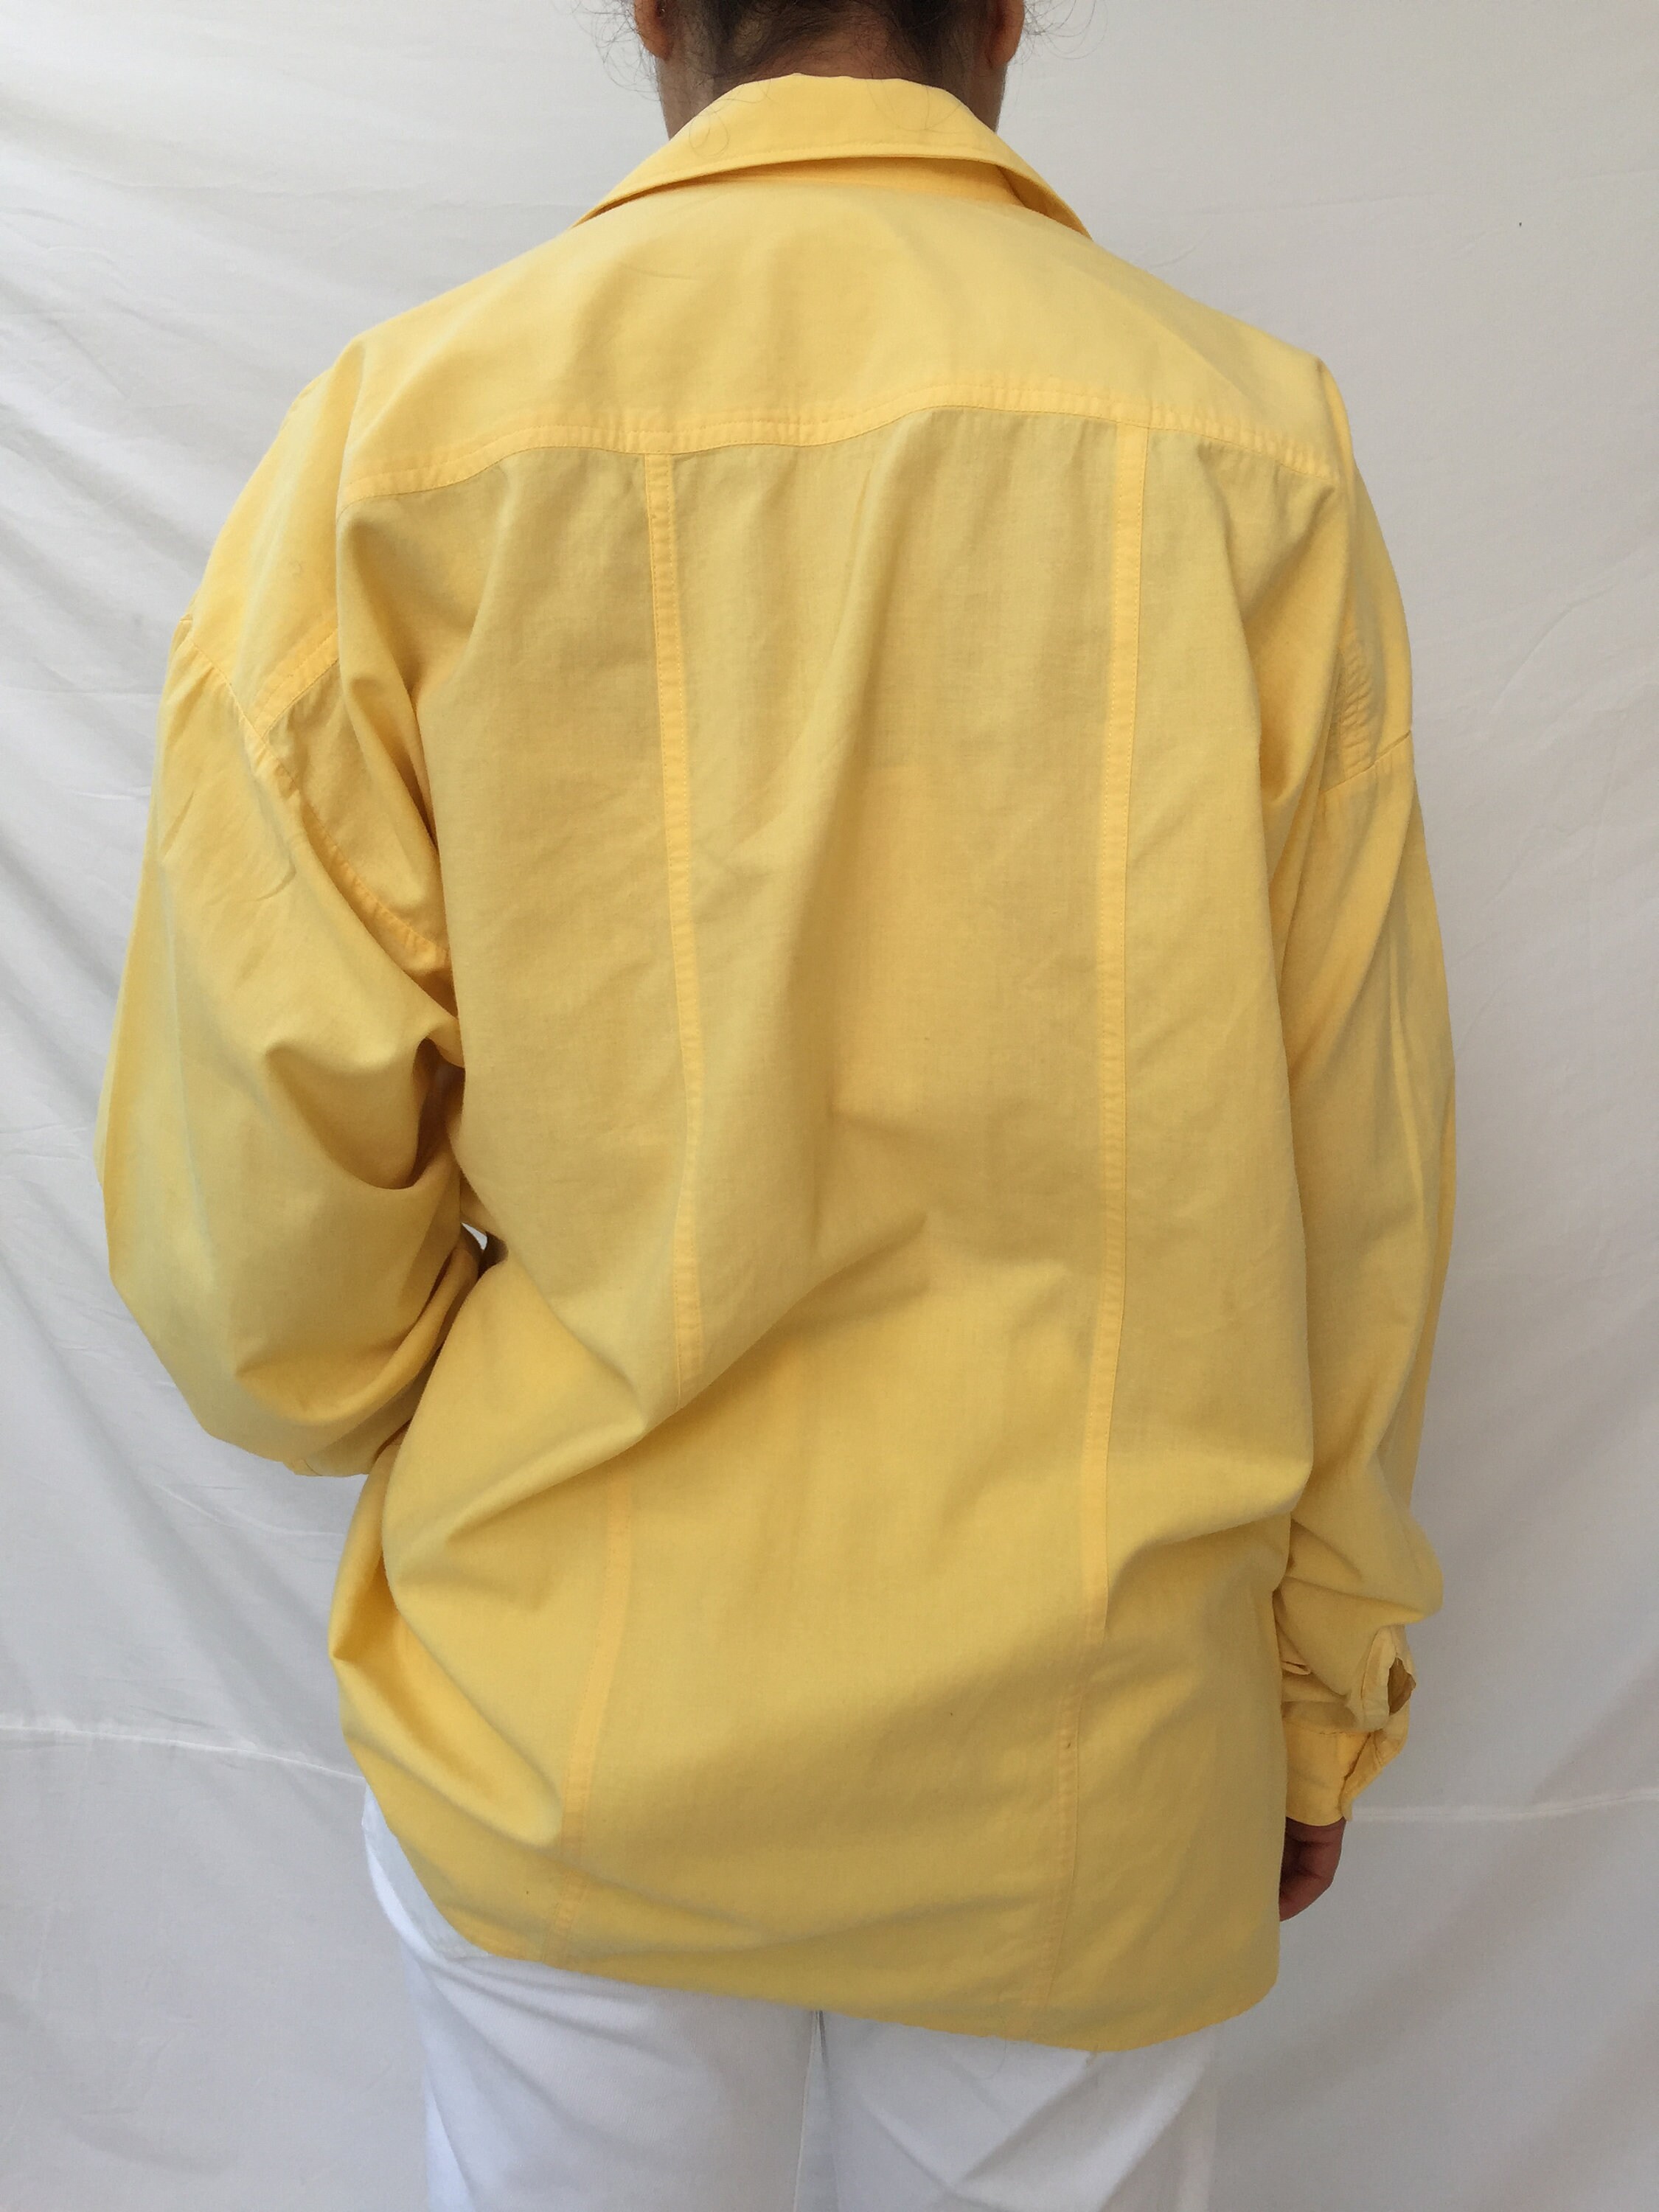 Vintage Pastel Yellow Button DownShirt | Etsy